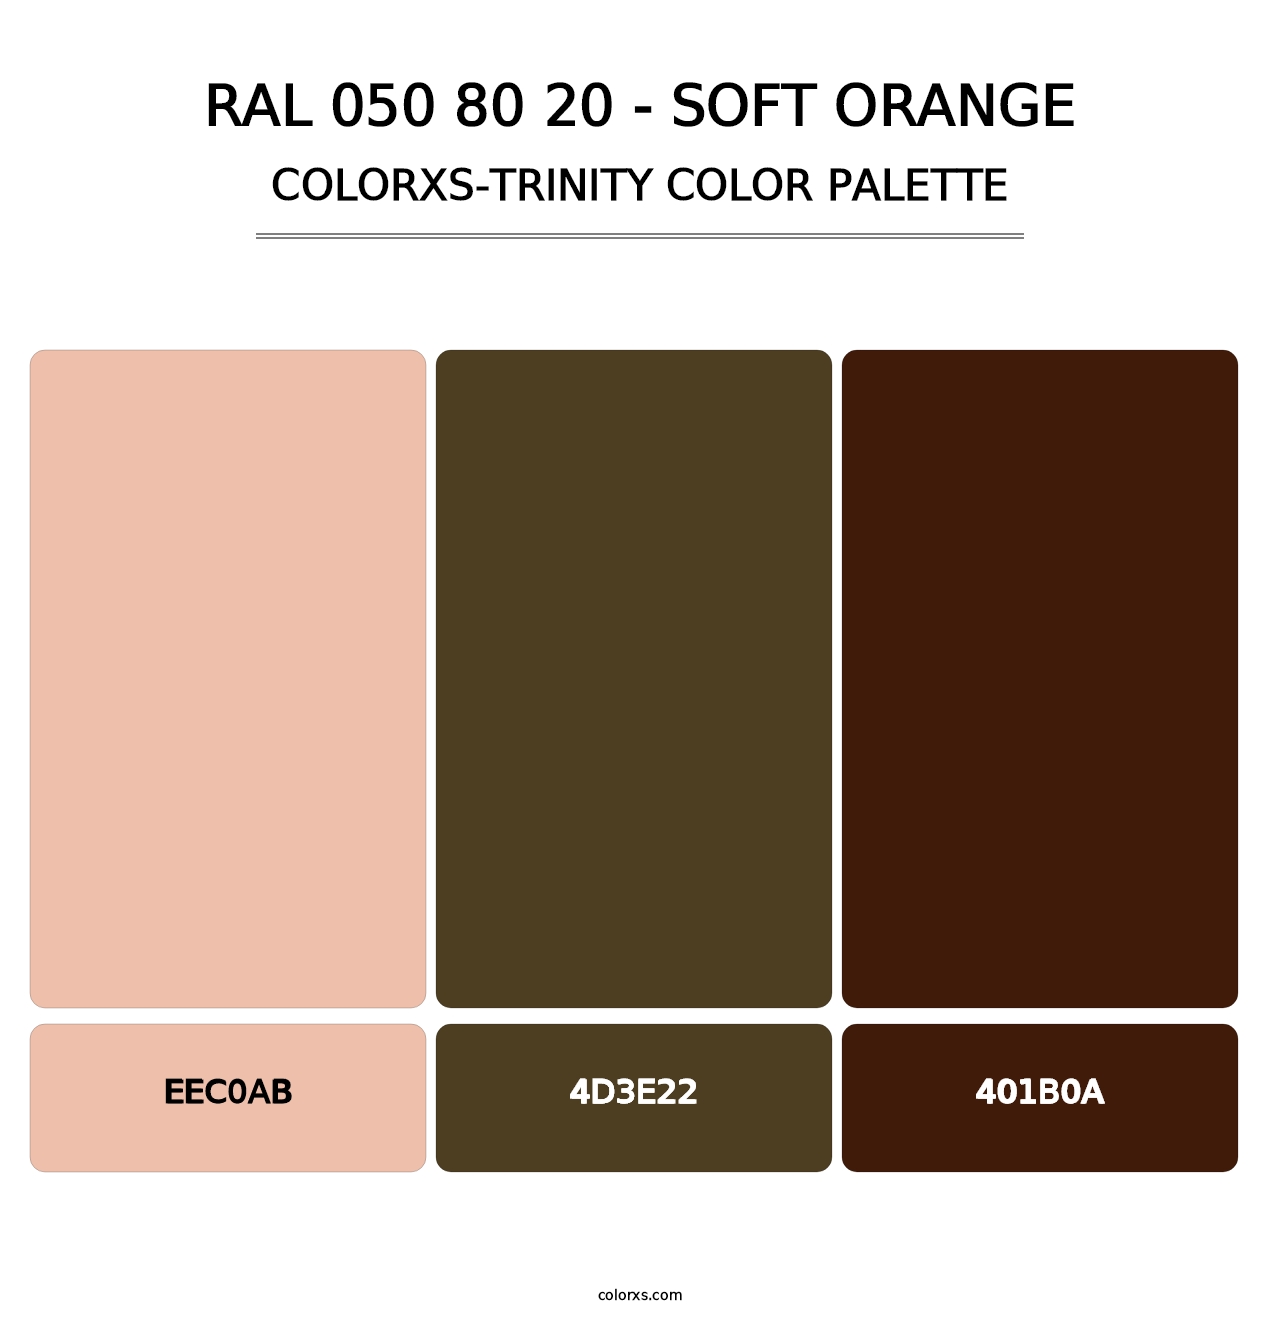 RAL 050 80 20 - Soft Orange - Colorxs Trinity Palette